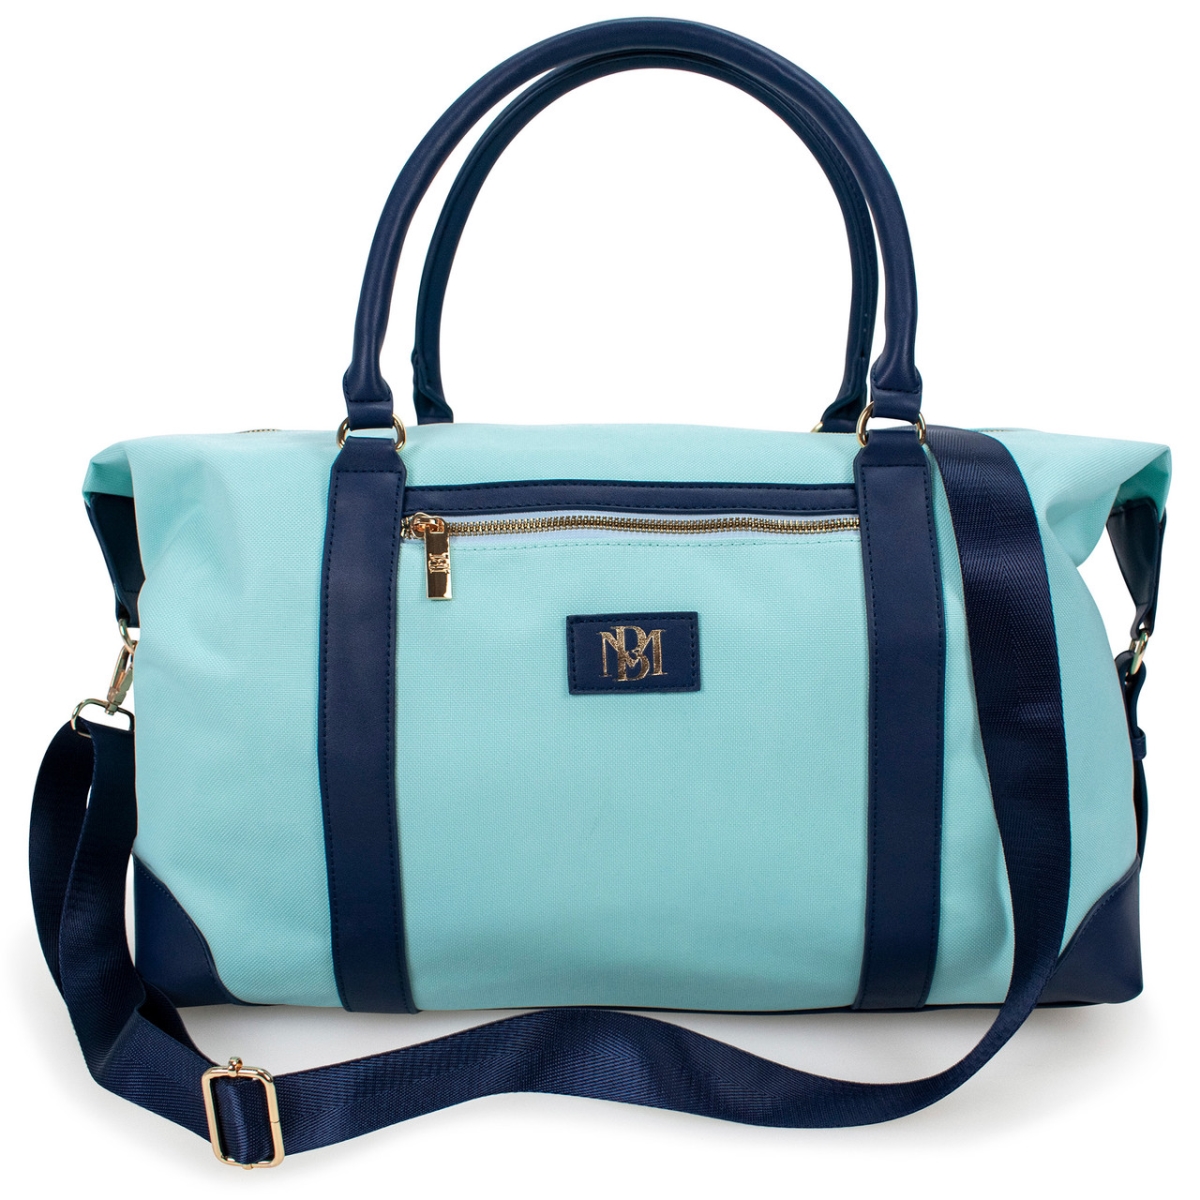 Picture of Badgley Mischka BMWKBARBLB Barbara Tote Weekender Travel Bag, Light Blue - One size